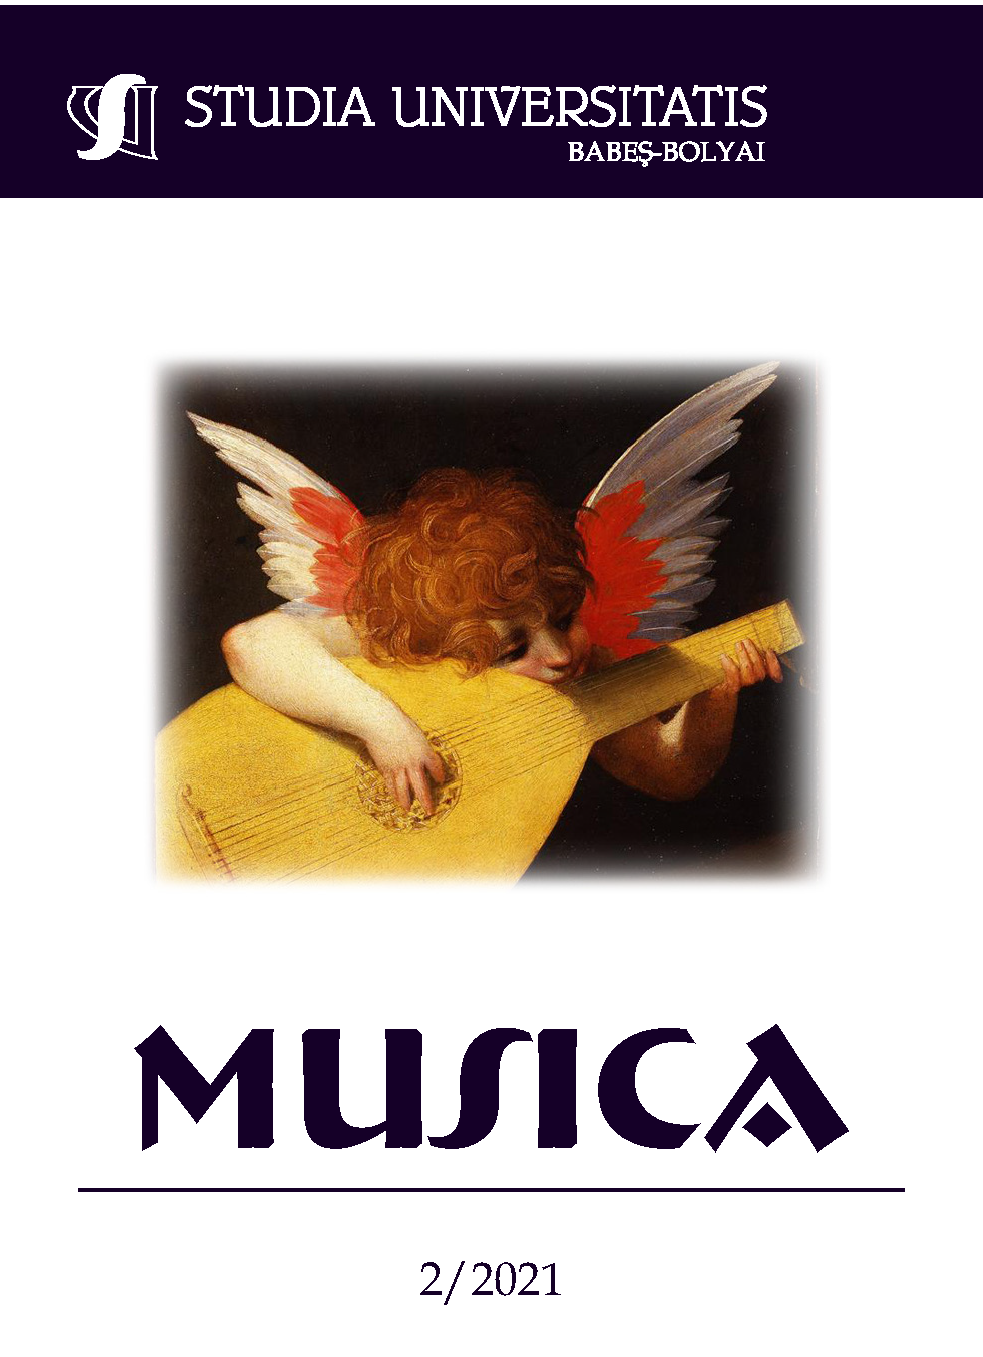 STUDIA UBB MUSICA, Volume 66 (LXVI), No. 2, December 2021